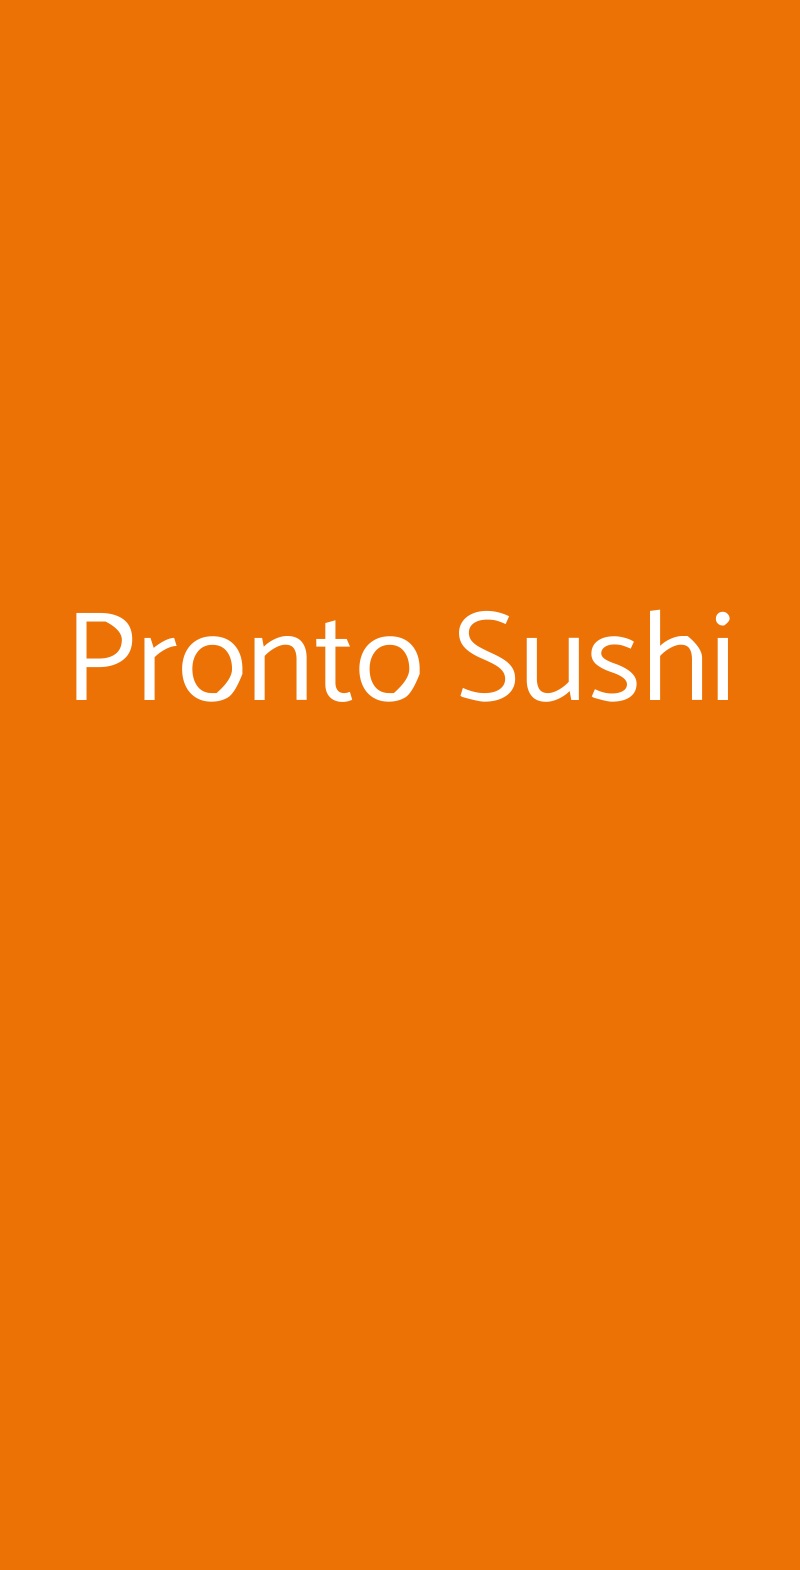 Pronto Sushi Milano menù 1 pagina